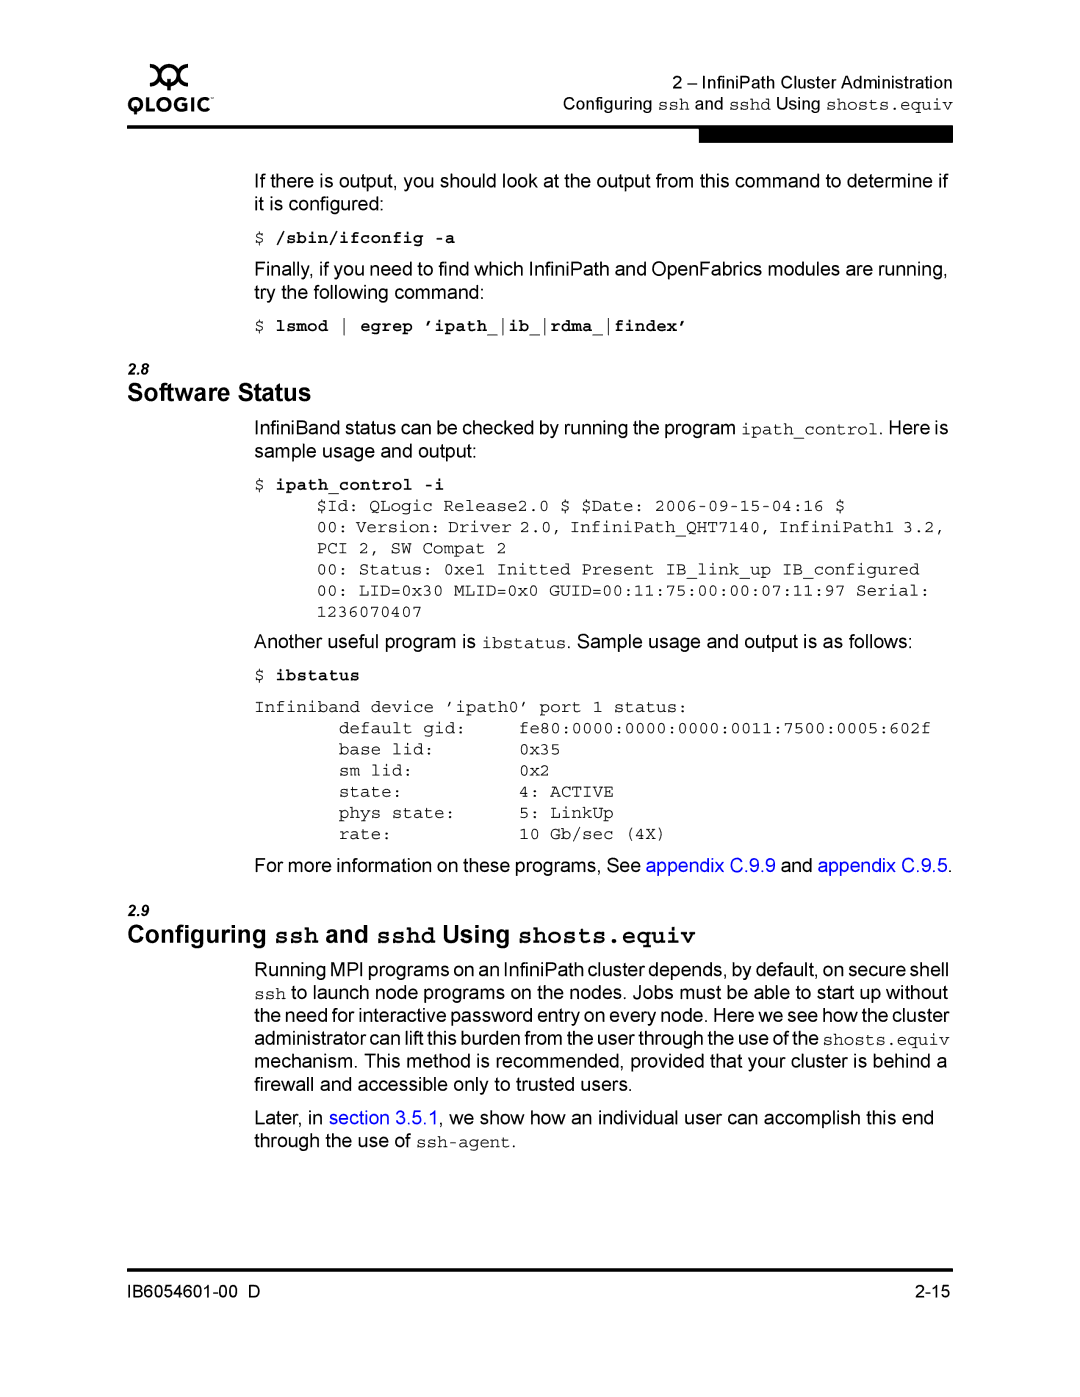 Q-Logic IB6054601-00 D manual Software Status, Configuring ssh and sshd Using shosts.equiv 